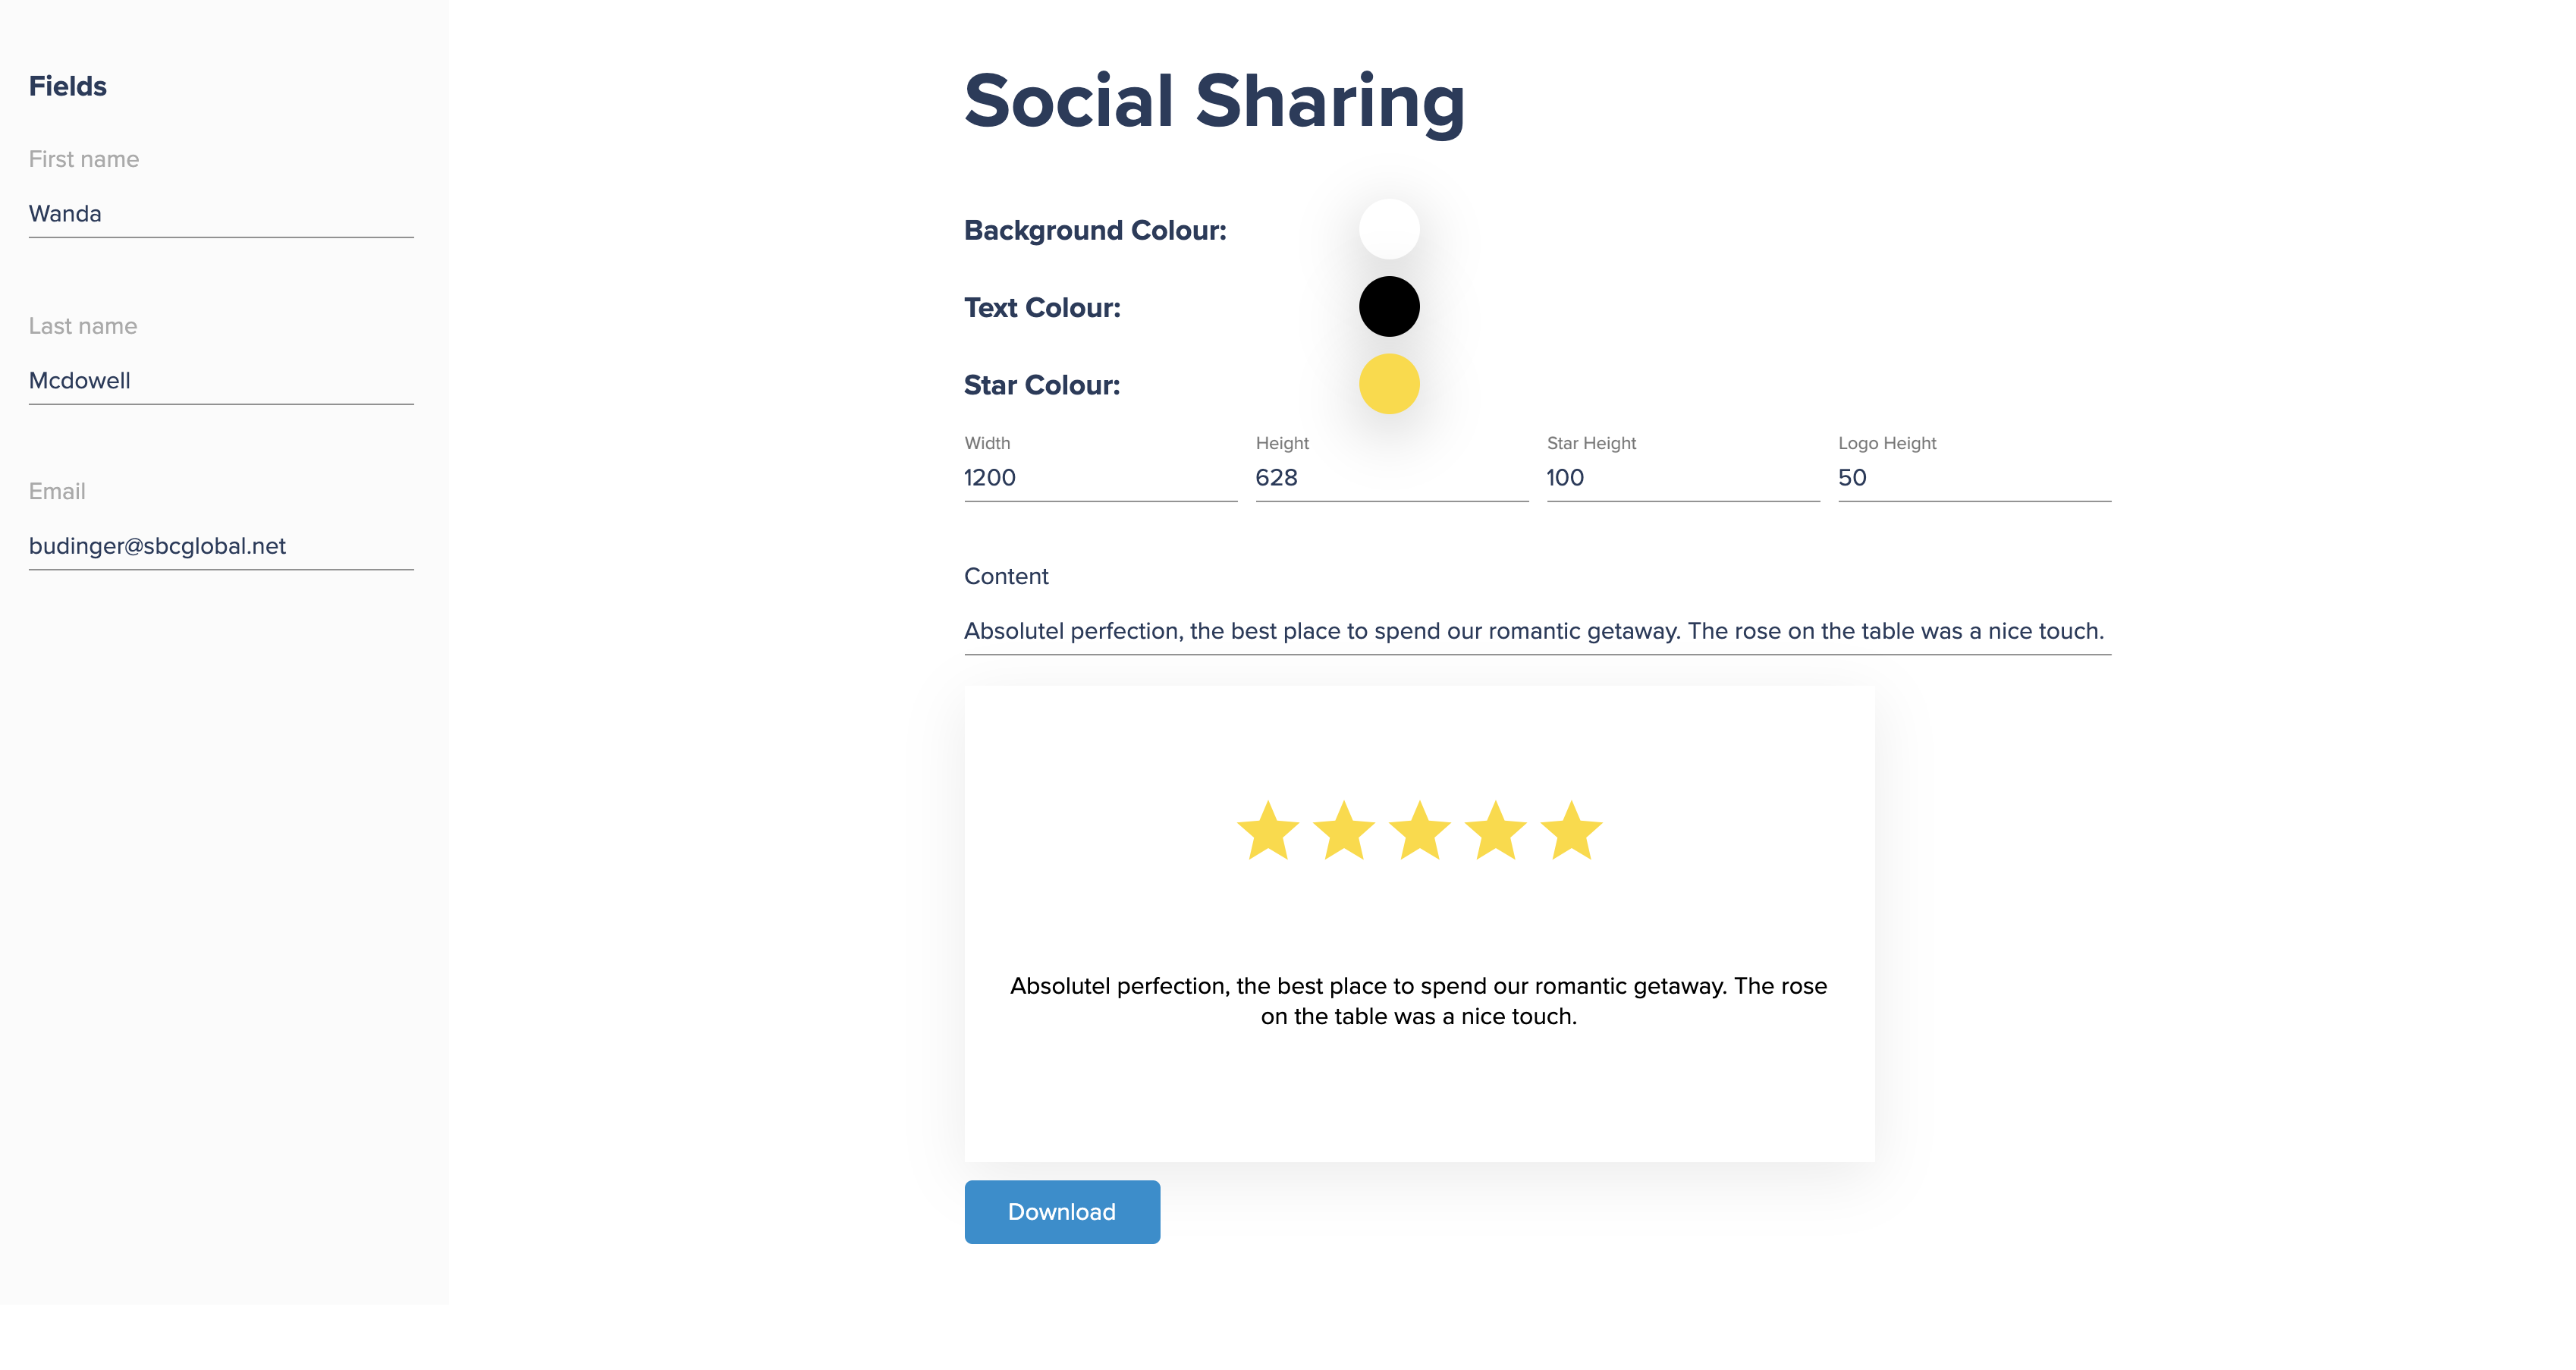 Social sharing customer feedback